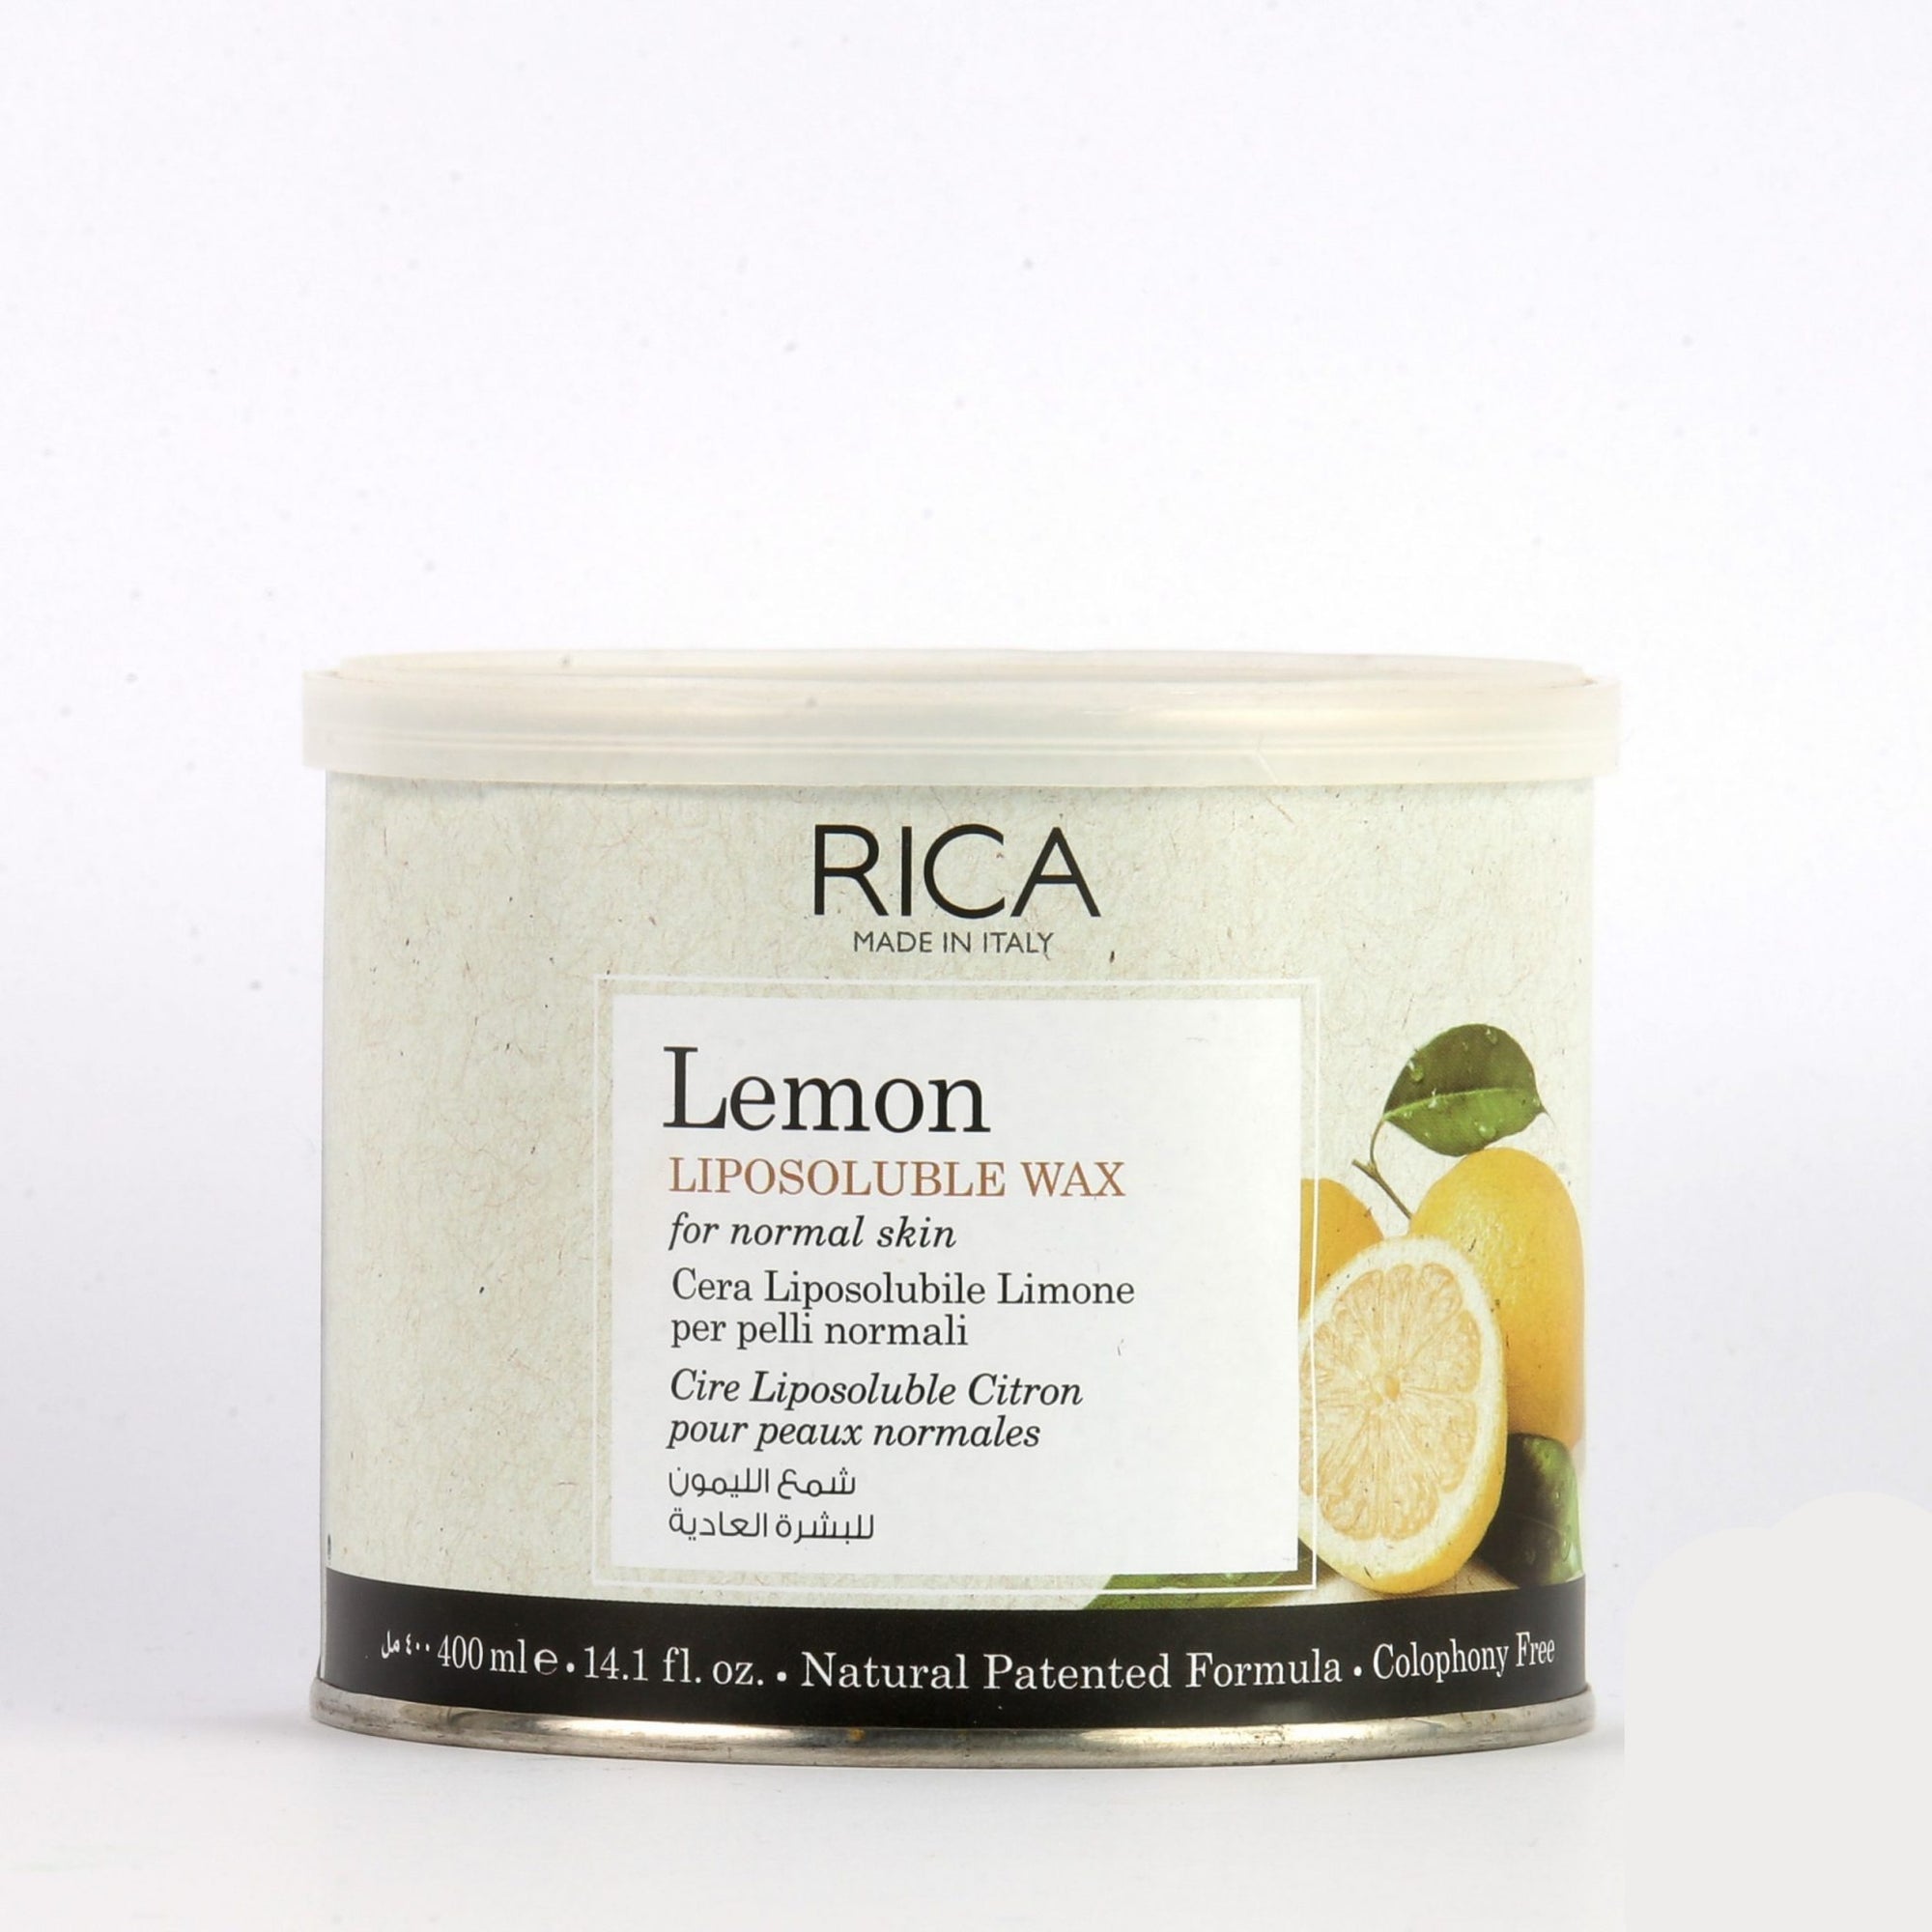 RICA Liposoluble Wax For Normal Skin Lemon 400ml freeshipping - lasertag.pk